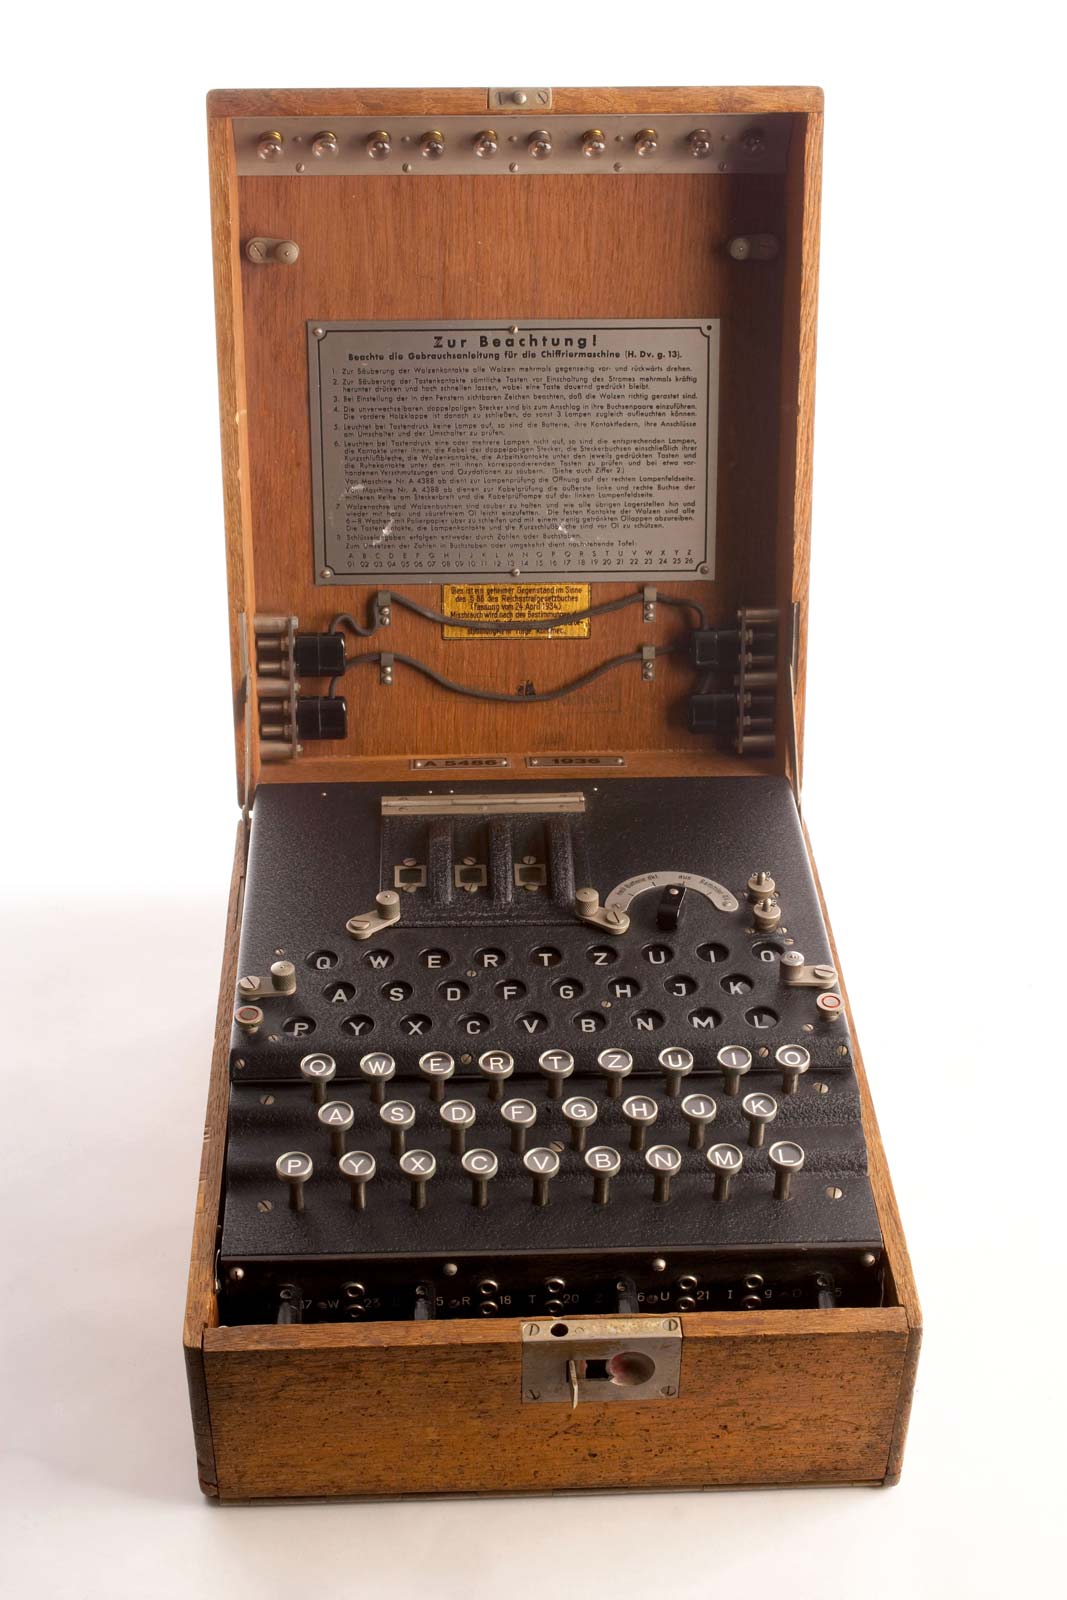 A máquina alemã Enigma, decifrada por Alan Turing durante a Segunda Guerra Mundial. 